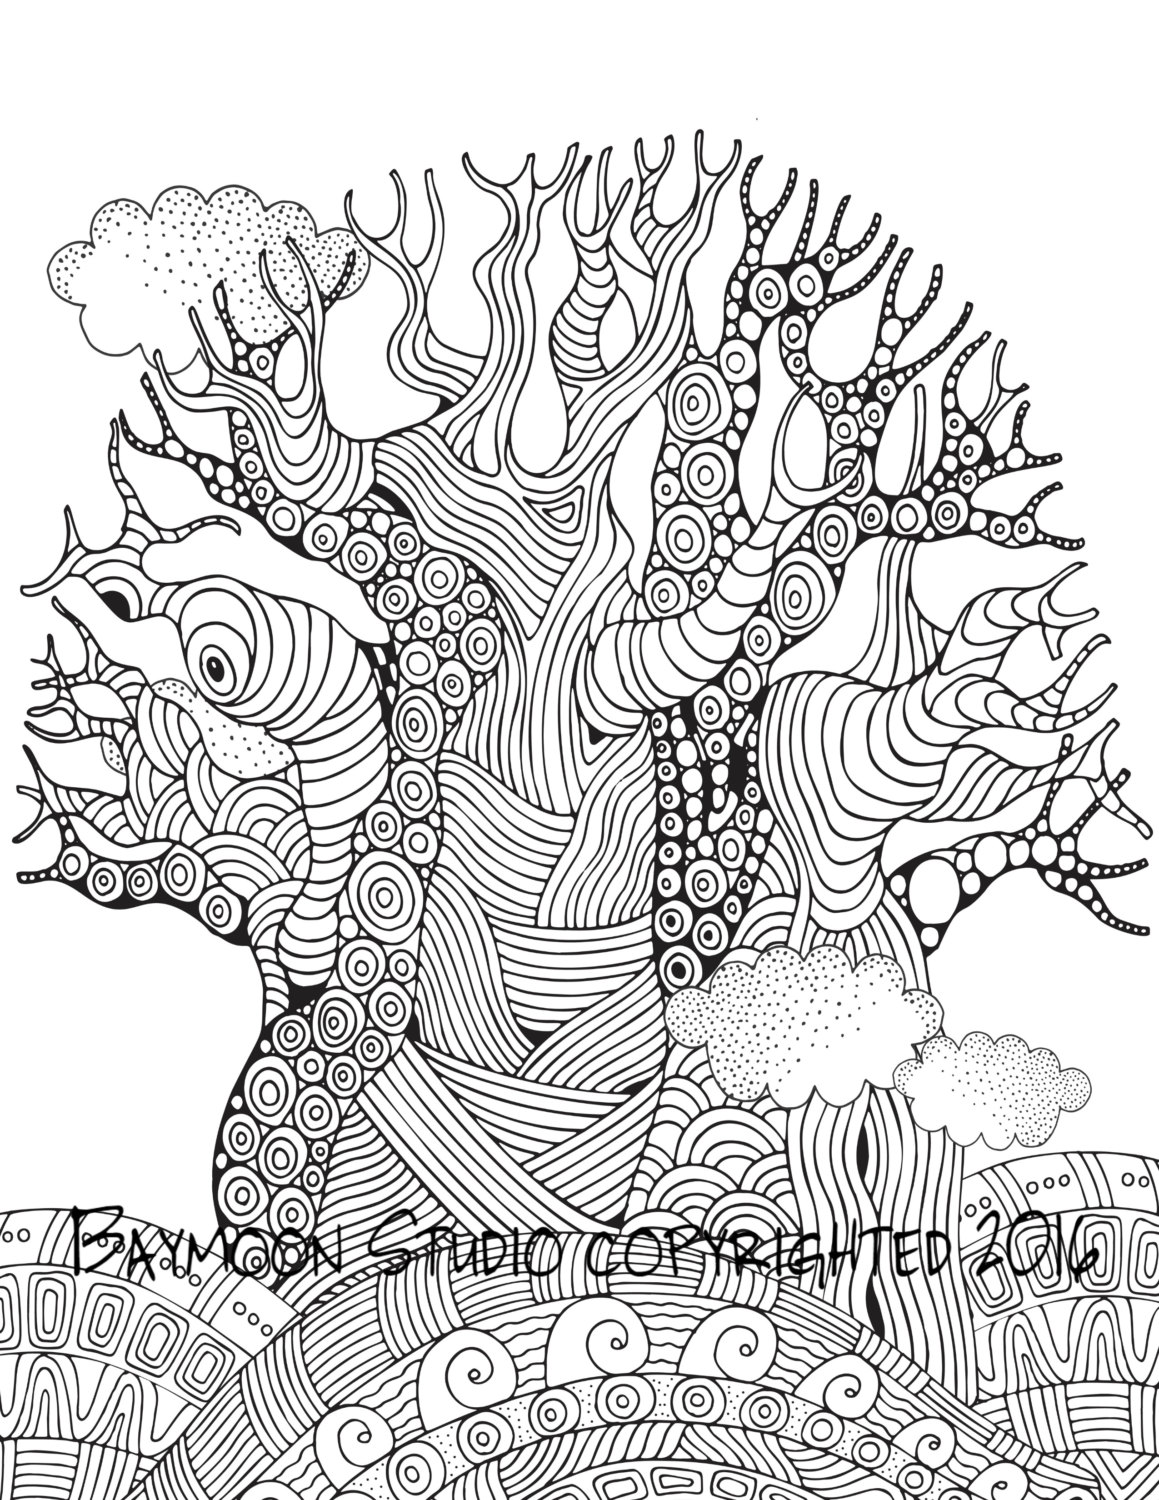 Baobab Tree coloring #3, Download drawings